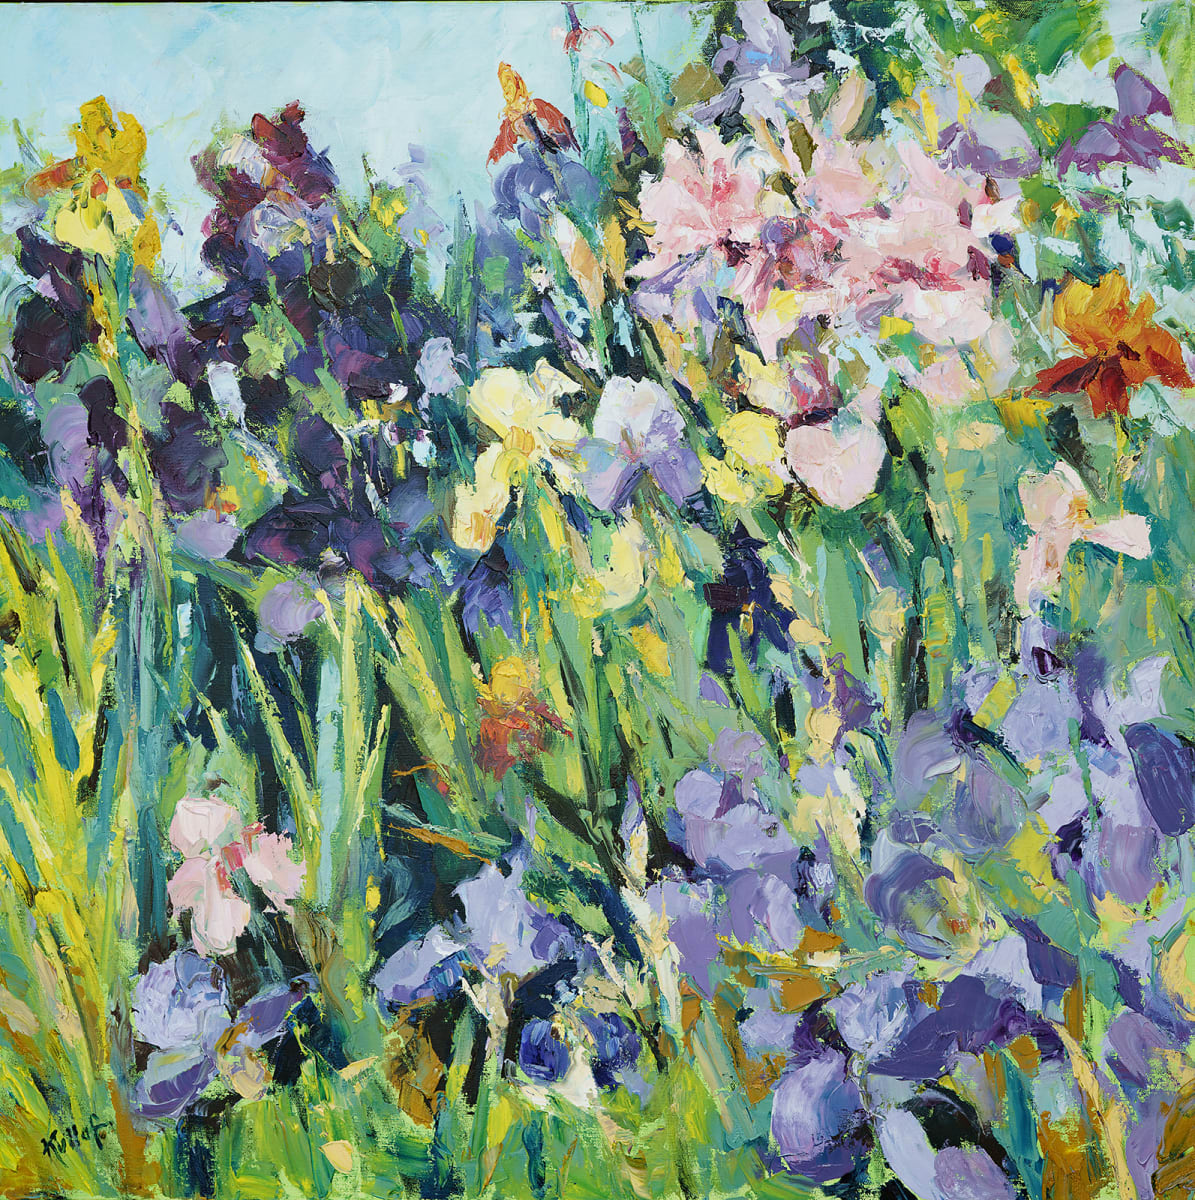 Garden of Joy by Anne Kullaf  Image: Irises in many colors dance across the canvas in a sunlit garden.